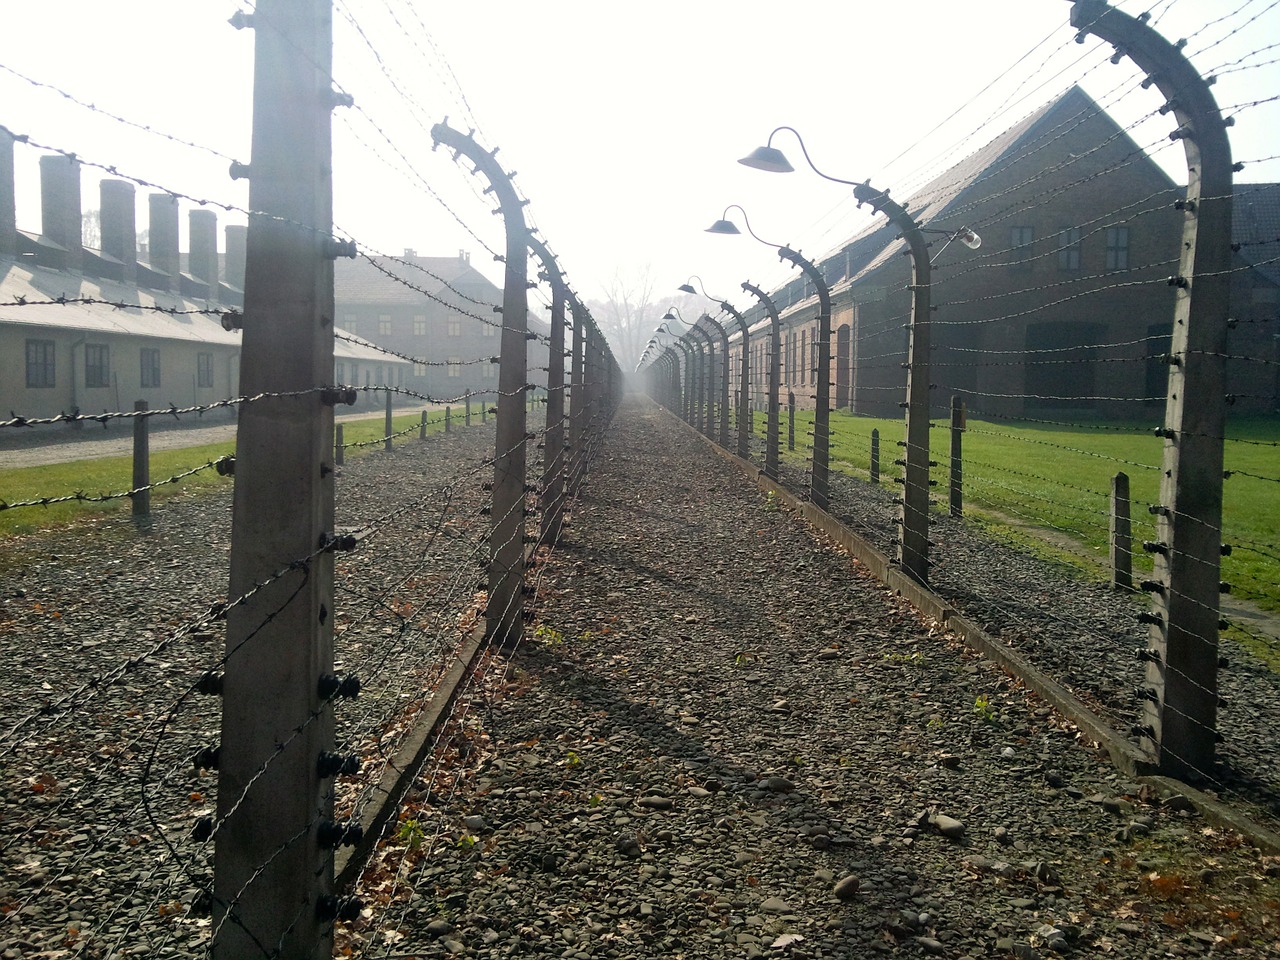 Koncentracijos Stovykla, Holokaustas, Auschwitz, Lenkija, Birkenau, Karas, Hitleris, Krakow, Nazi, Viela